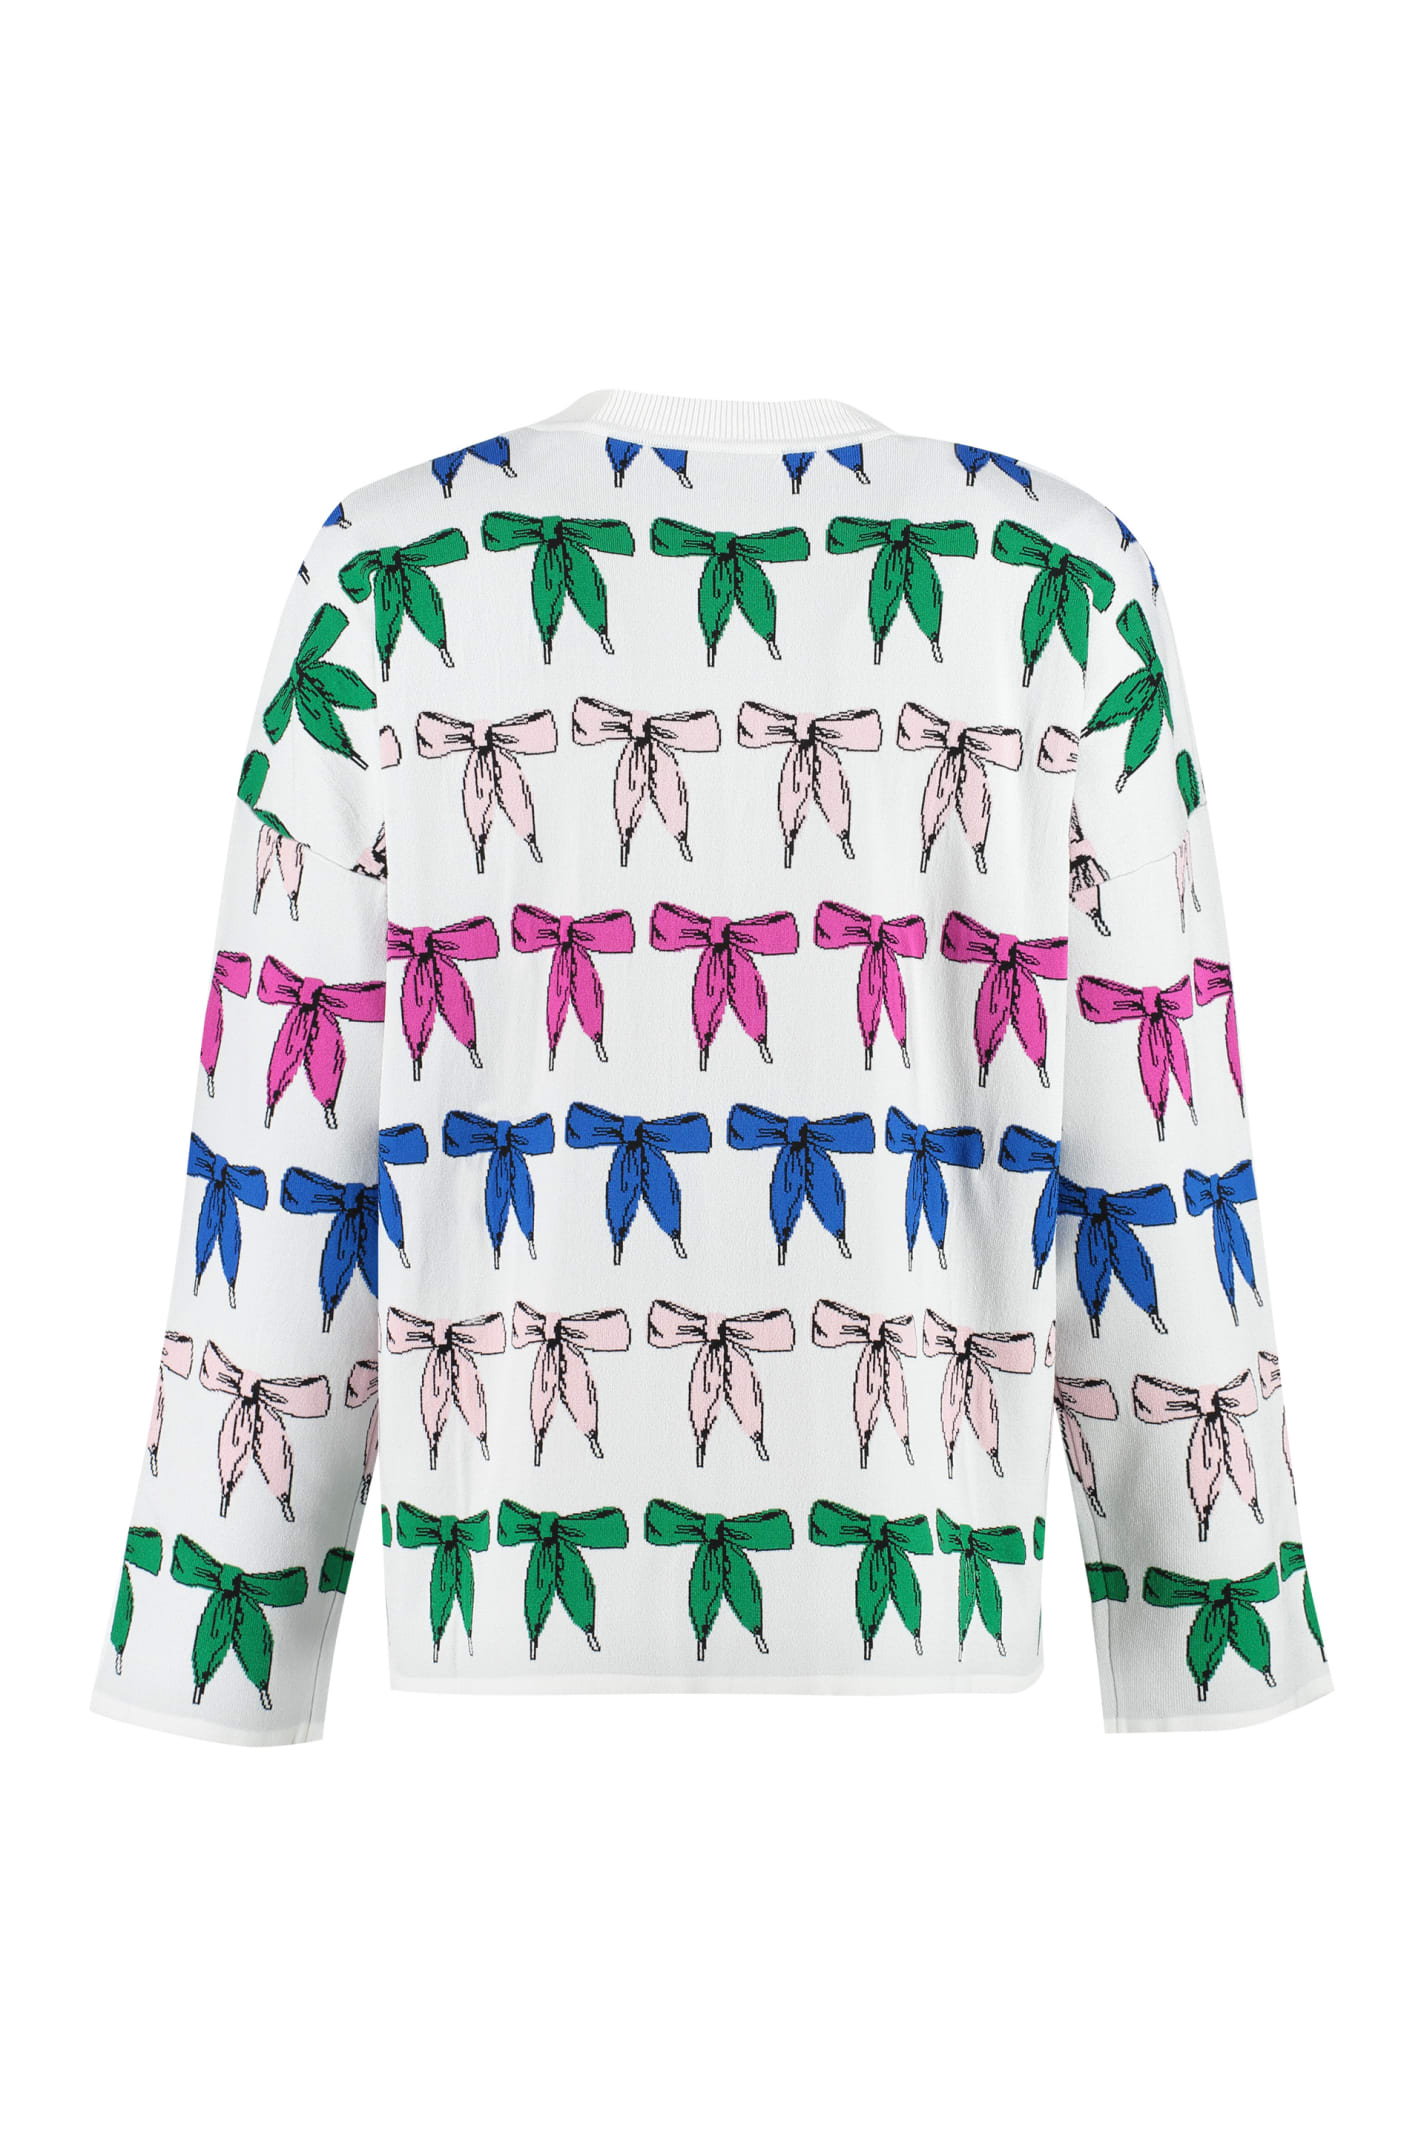 Shop Boutique Moschino Jacquard Crew-neck Sweater In White